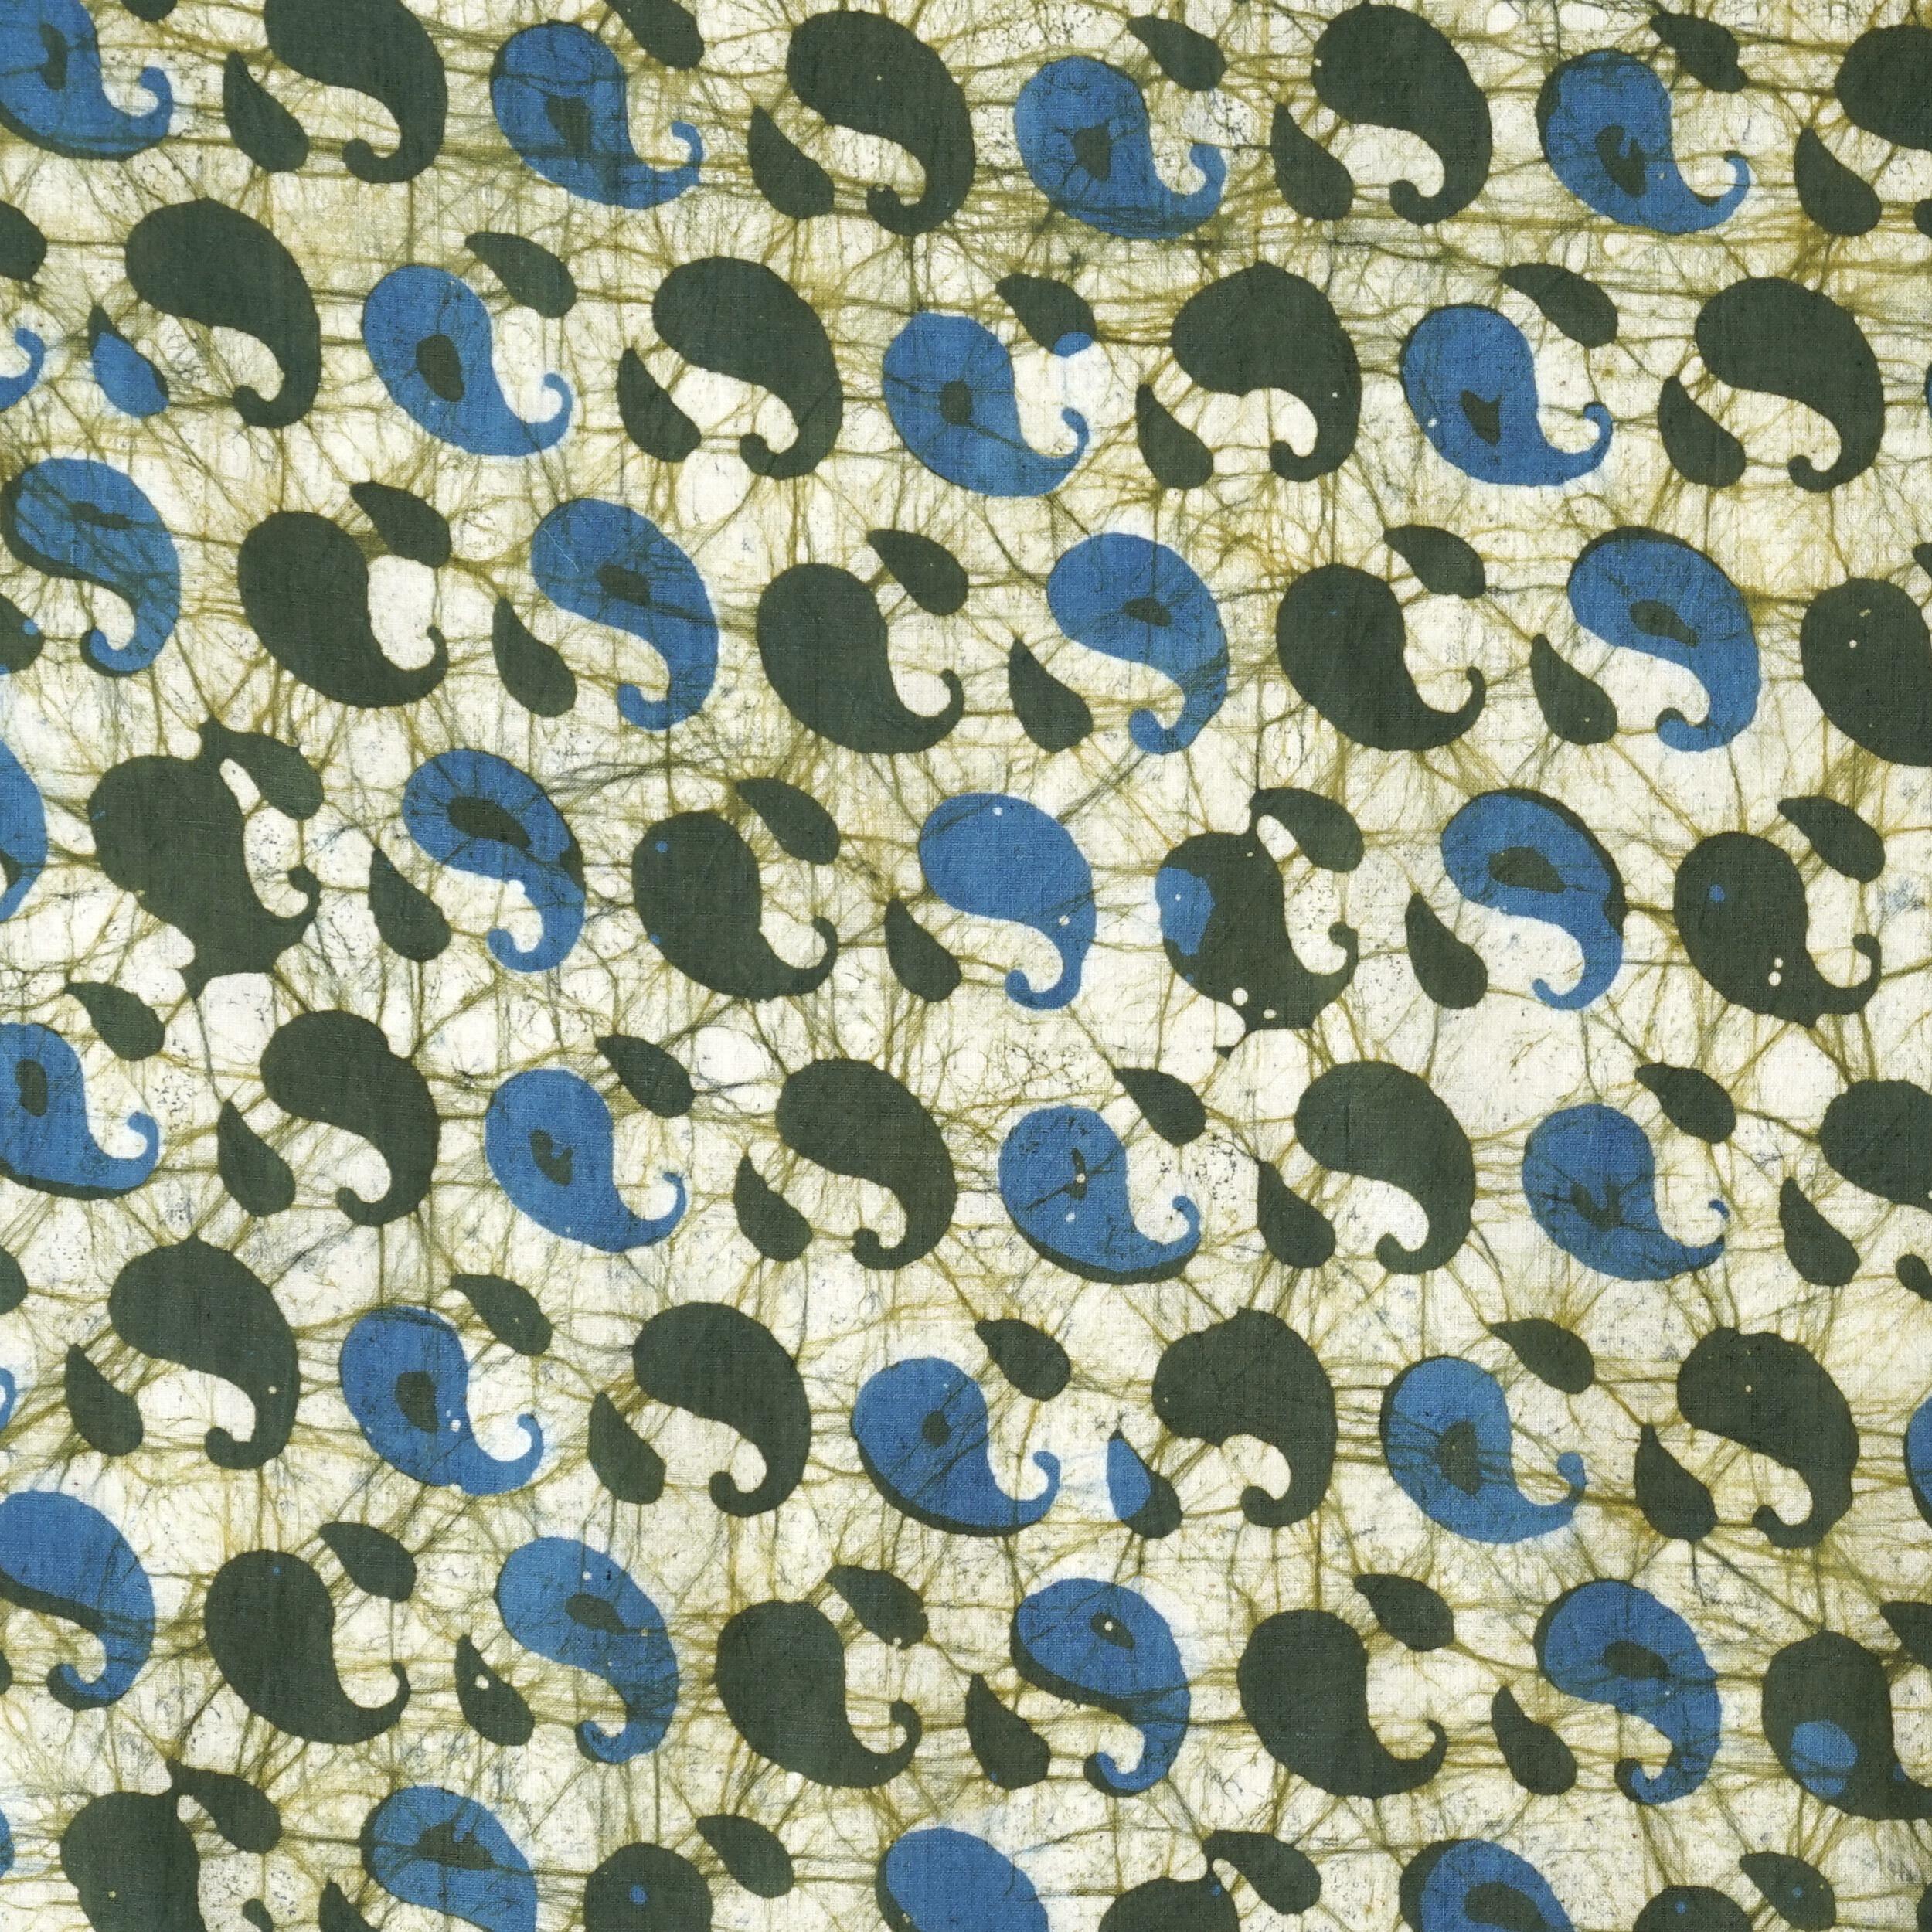 Block-Printed Batik Fabric - Cotton Cloth - Reactive Dyes - Paisley Design - Flat